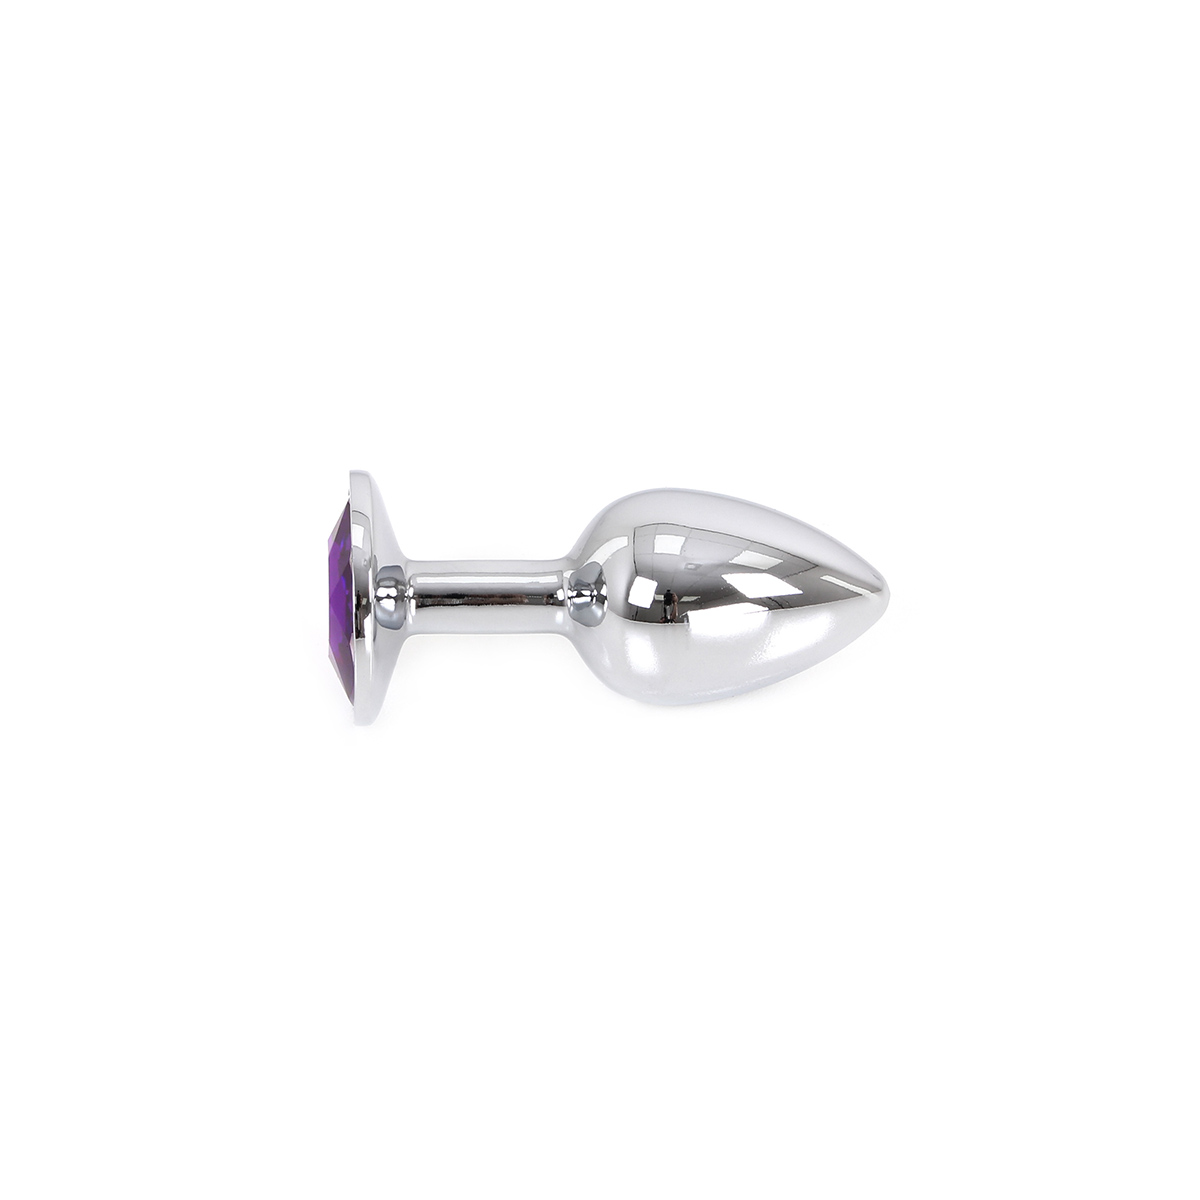 Buttplug-Aluminium-Purple-Small-OPR-3010052-2